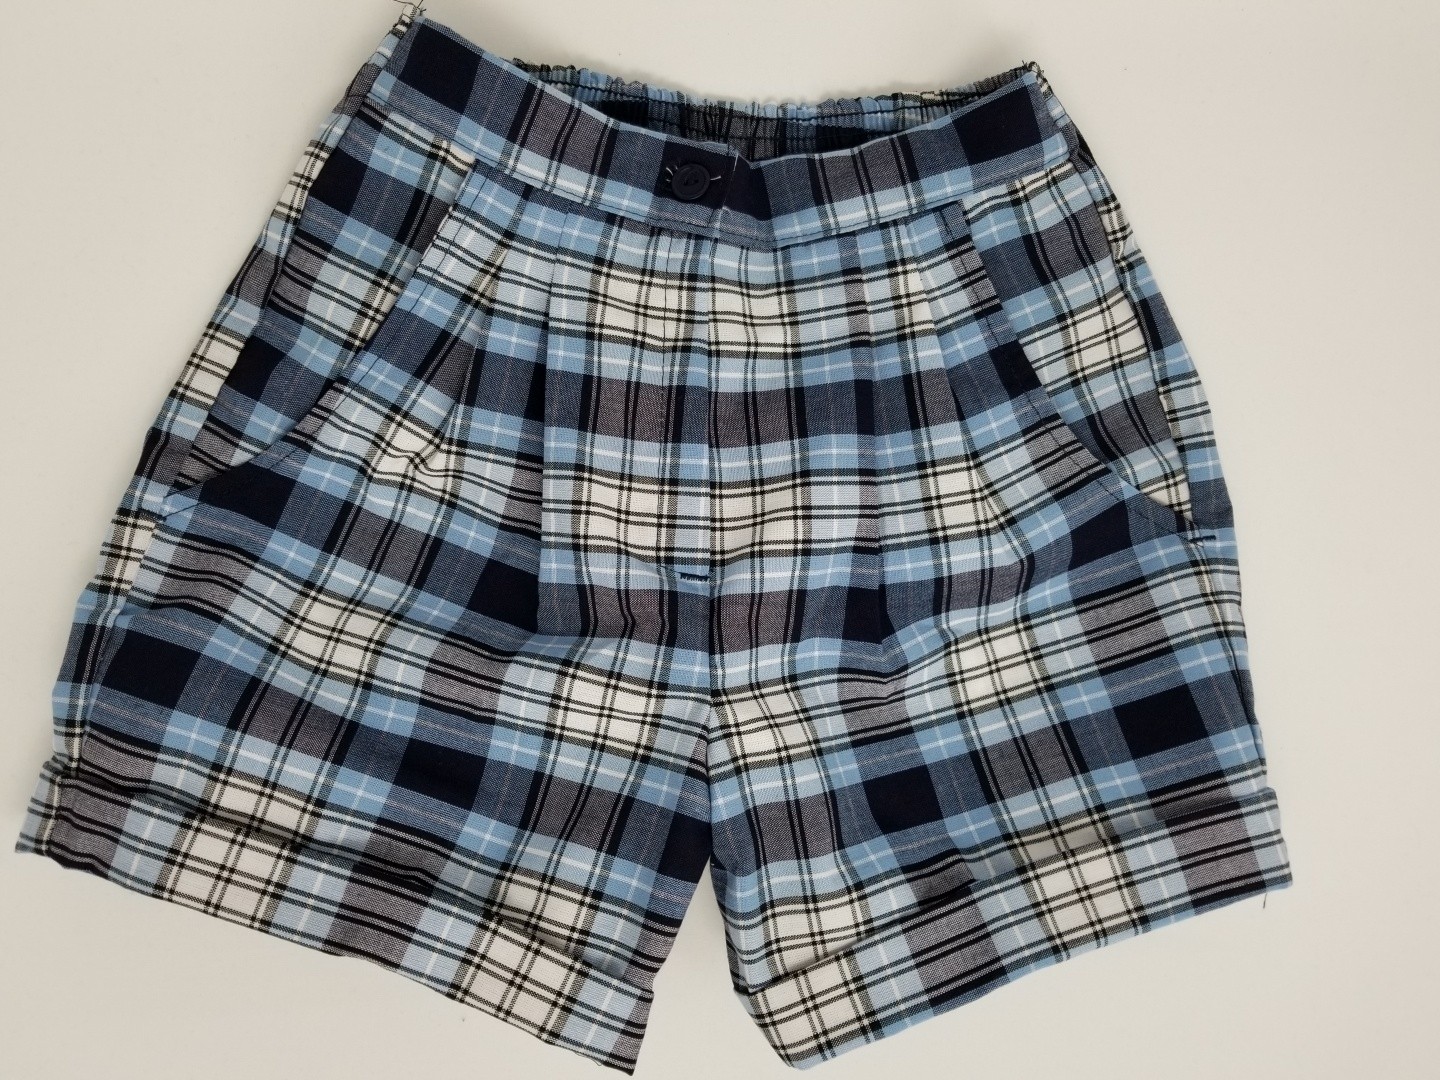 Girls Plaid Shorts- Cuffed hem - Shorts - Girls